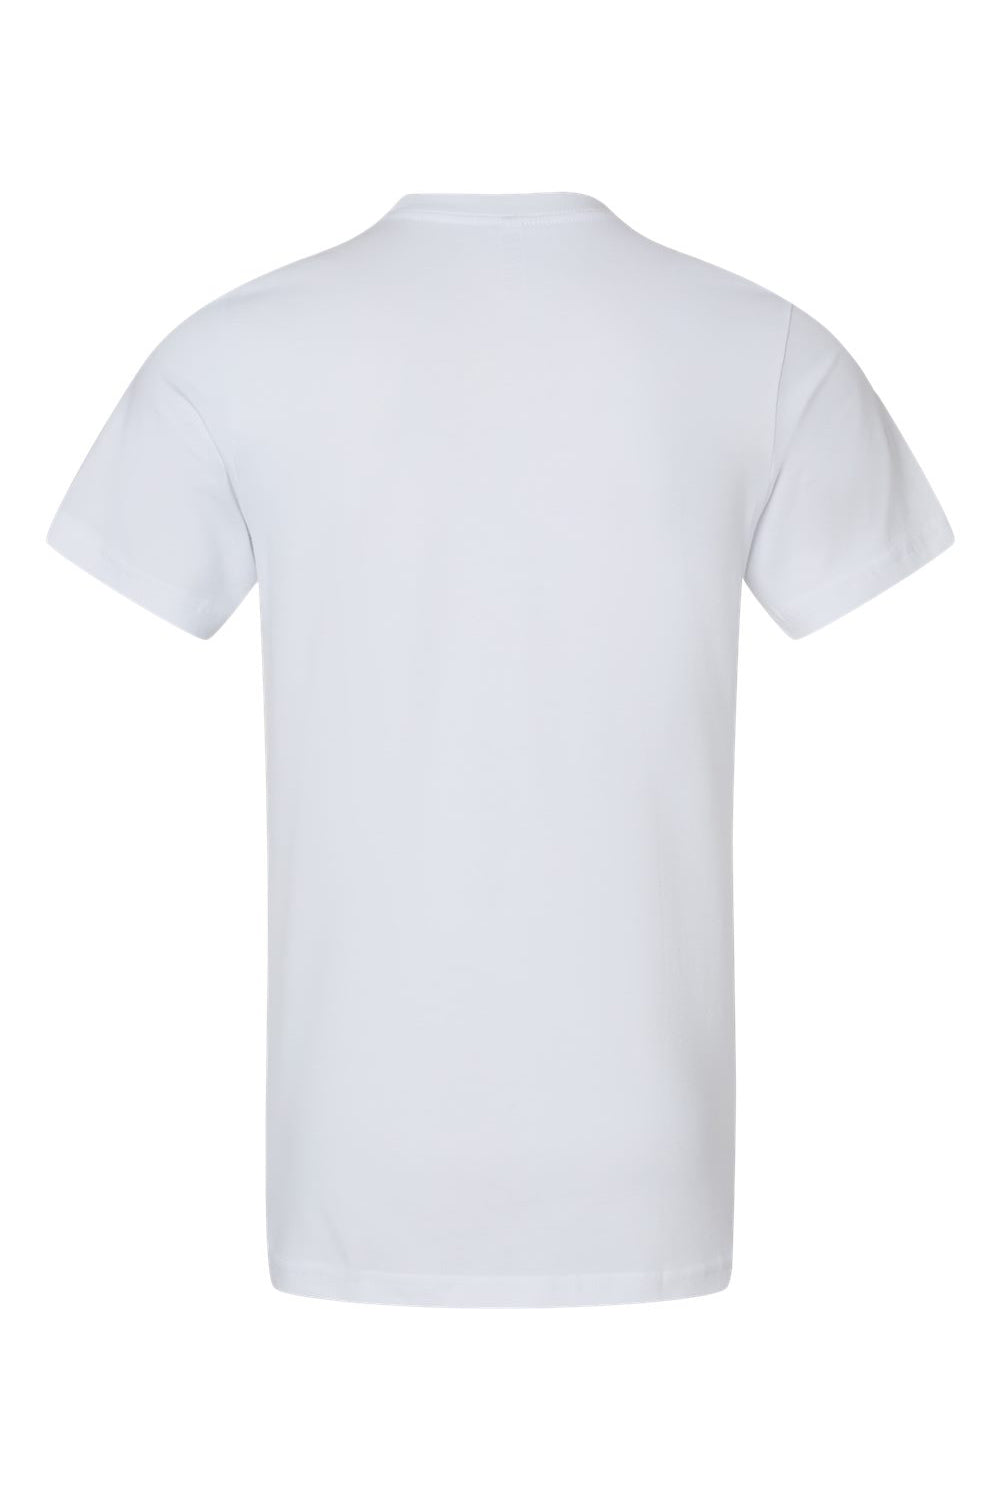 Bella + Canvas 3001U/3001USA Mens USA Made Jersey Short Sleeve Crewneck T-Shirt White Flat Back